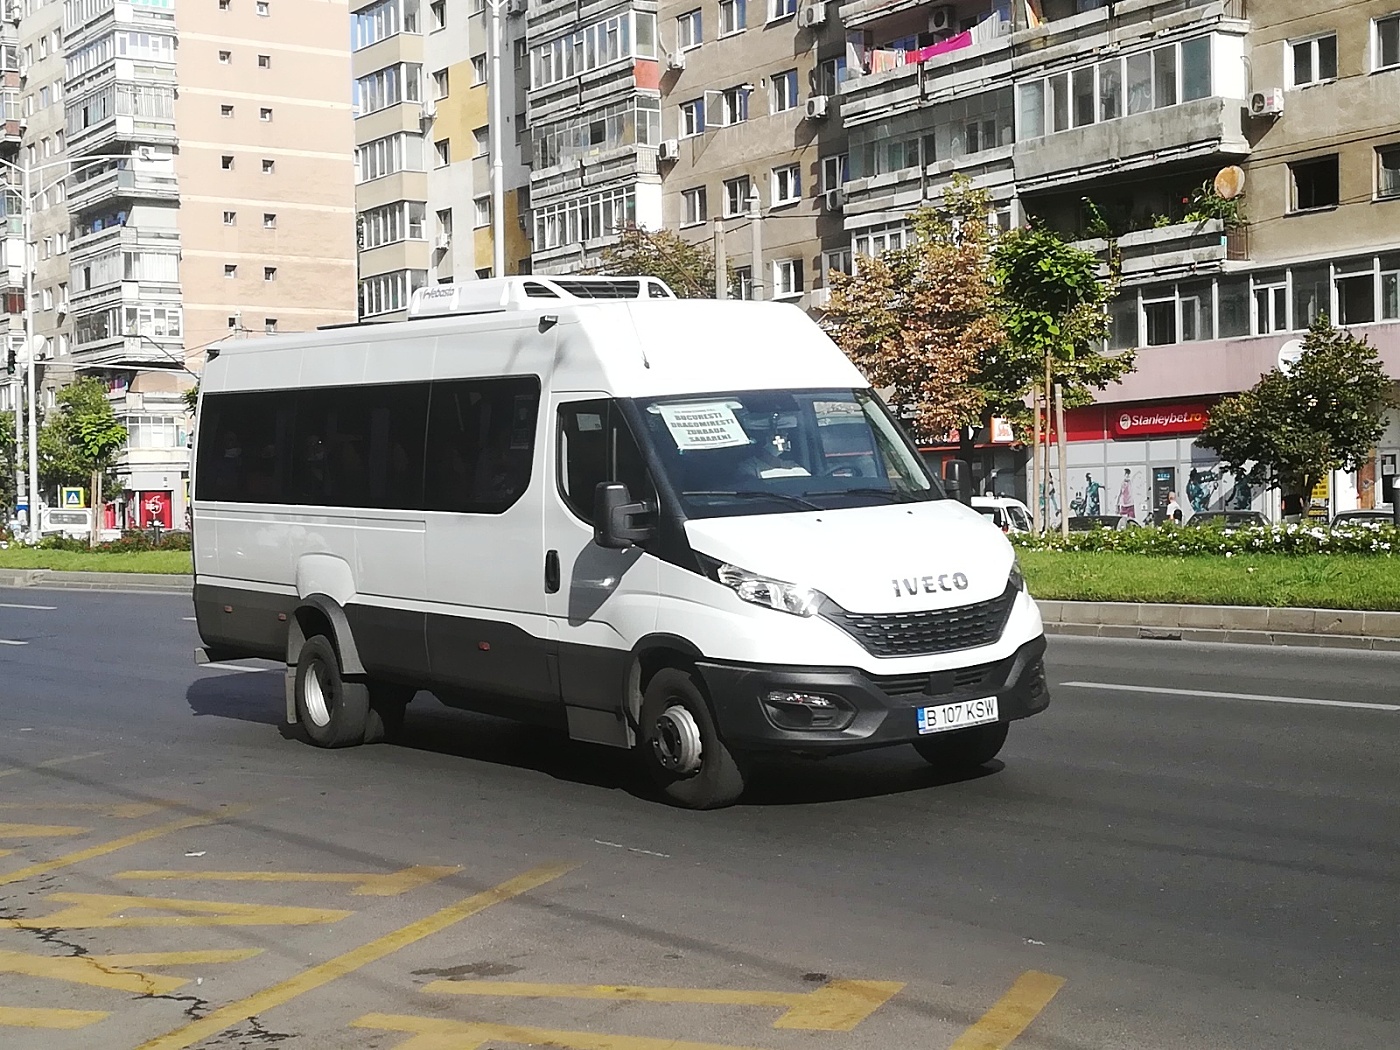 Iveco Daily 65C14G / Feniksbus #B 107 KSW